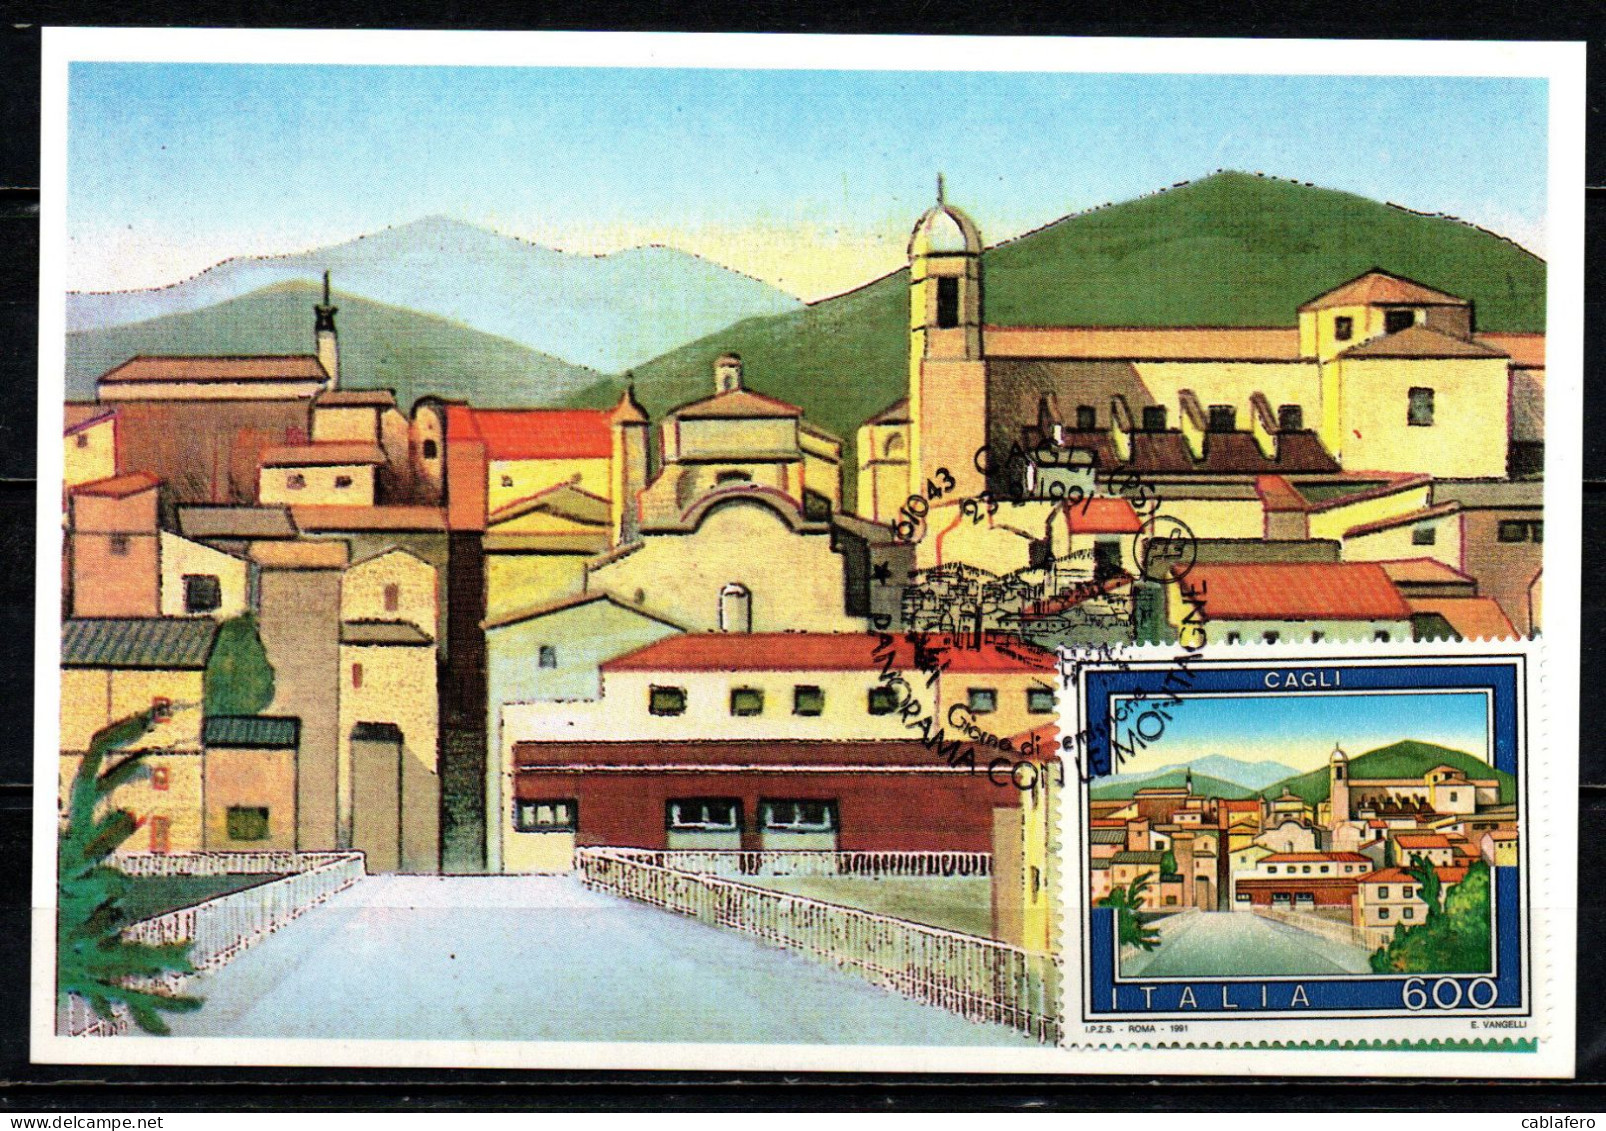 ITALIA - 1991 - IL TURISMO IN ITALIA: CAGLI - Cartes-Maximum (CM)